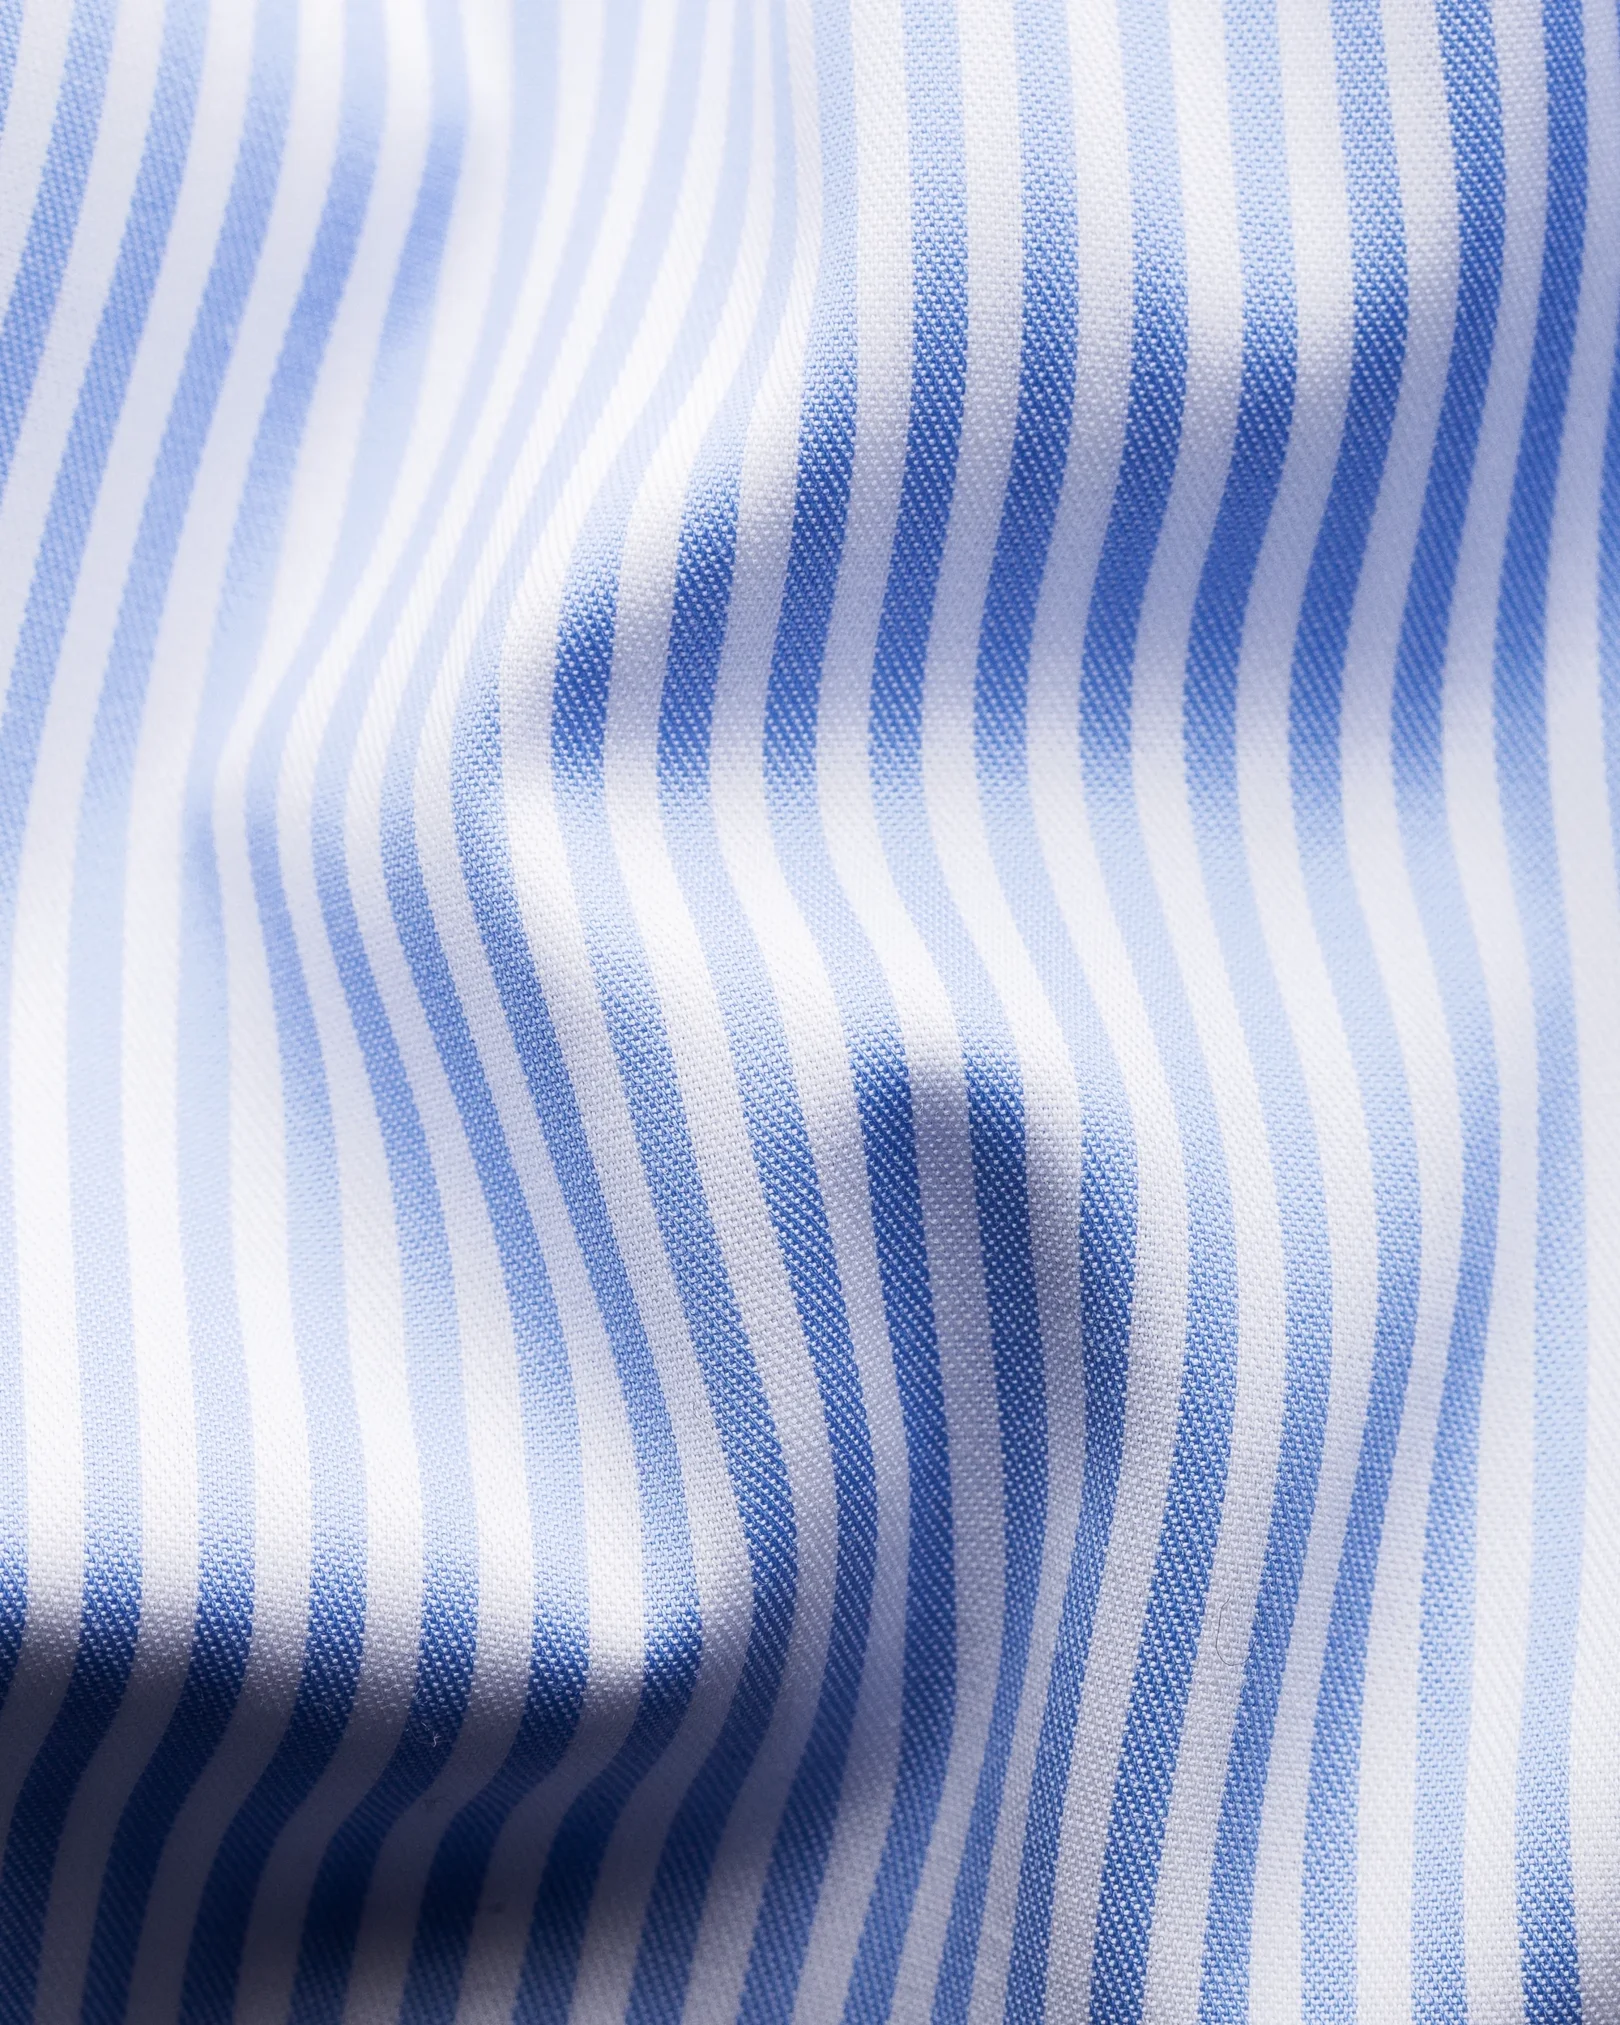 Eton - light blue signature twill shirt cut away single contemporary bf